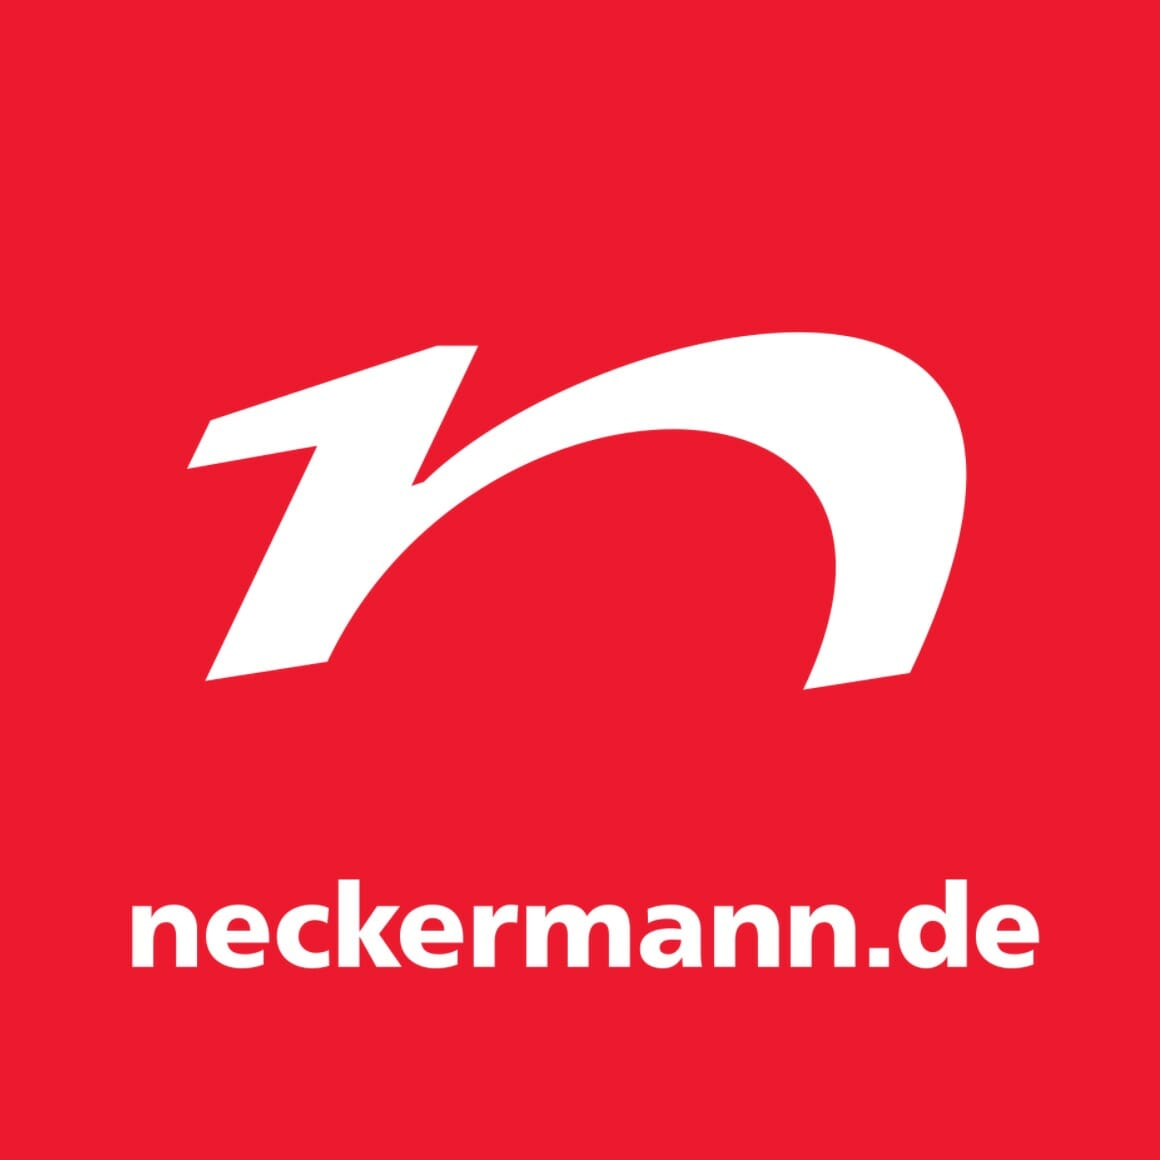 Neckermann Logo